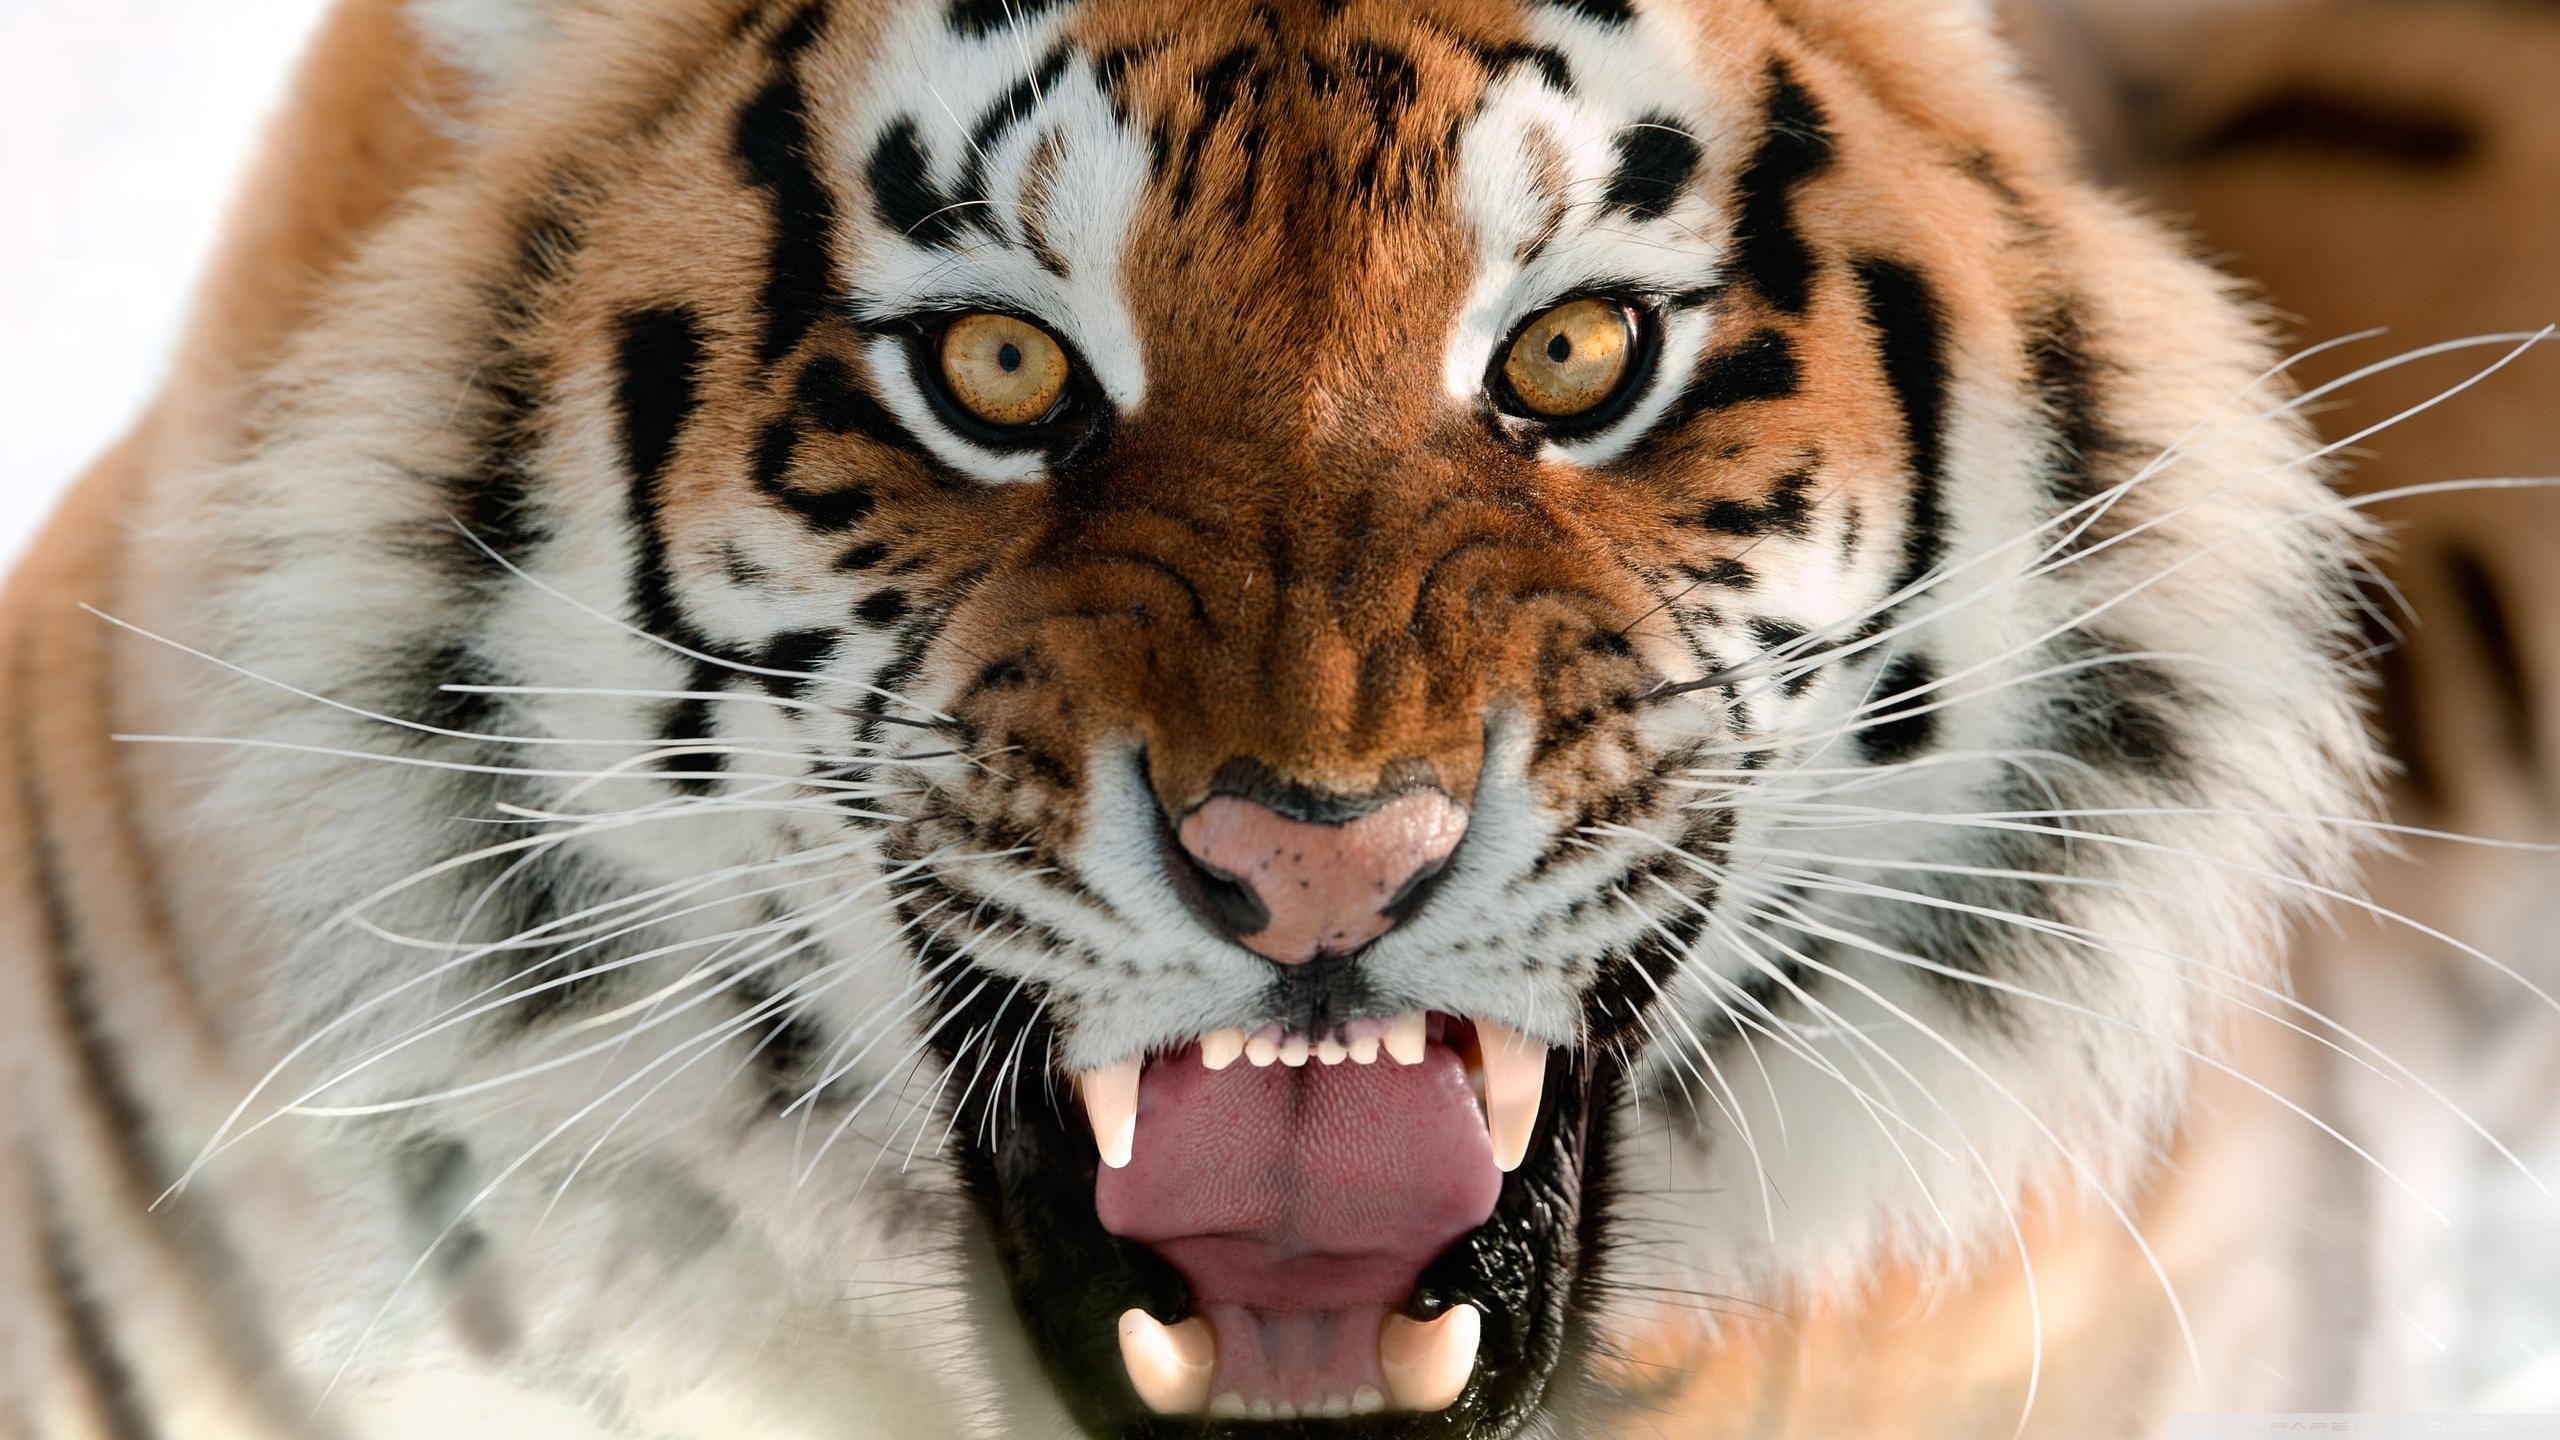 Tiger Roar Face ❤ 4K HD Desktop Wallpaper for 4K Ultra HD TV